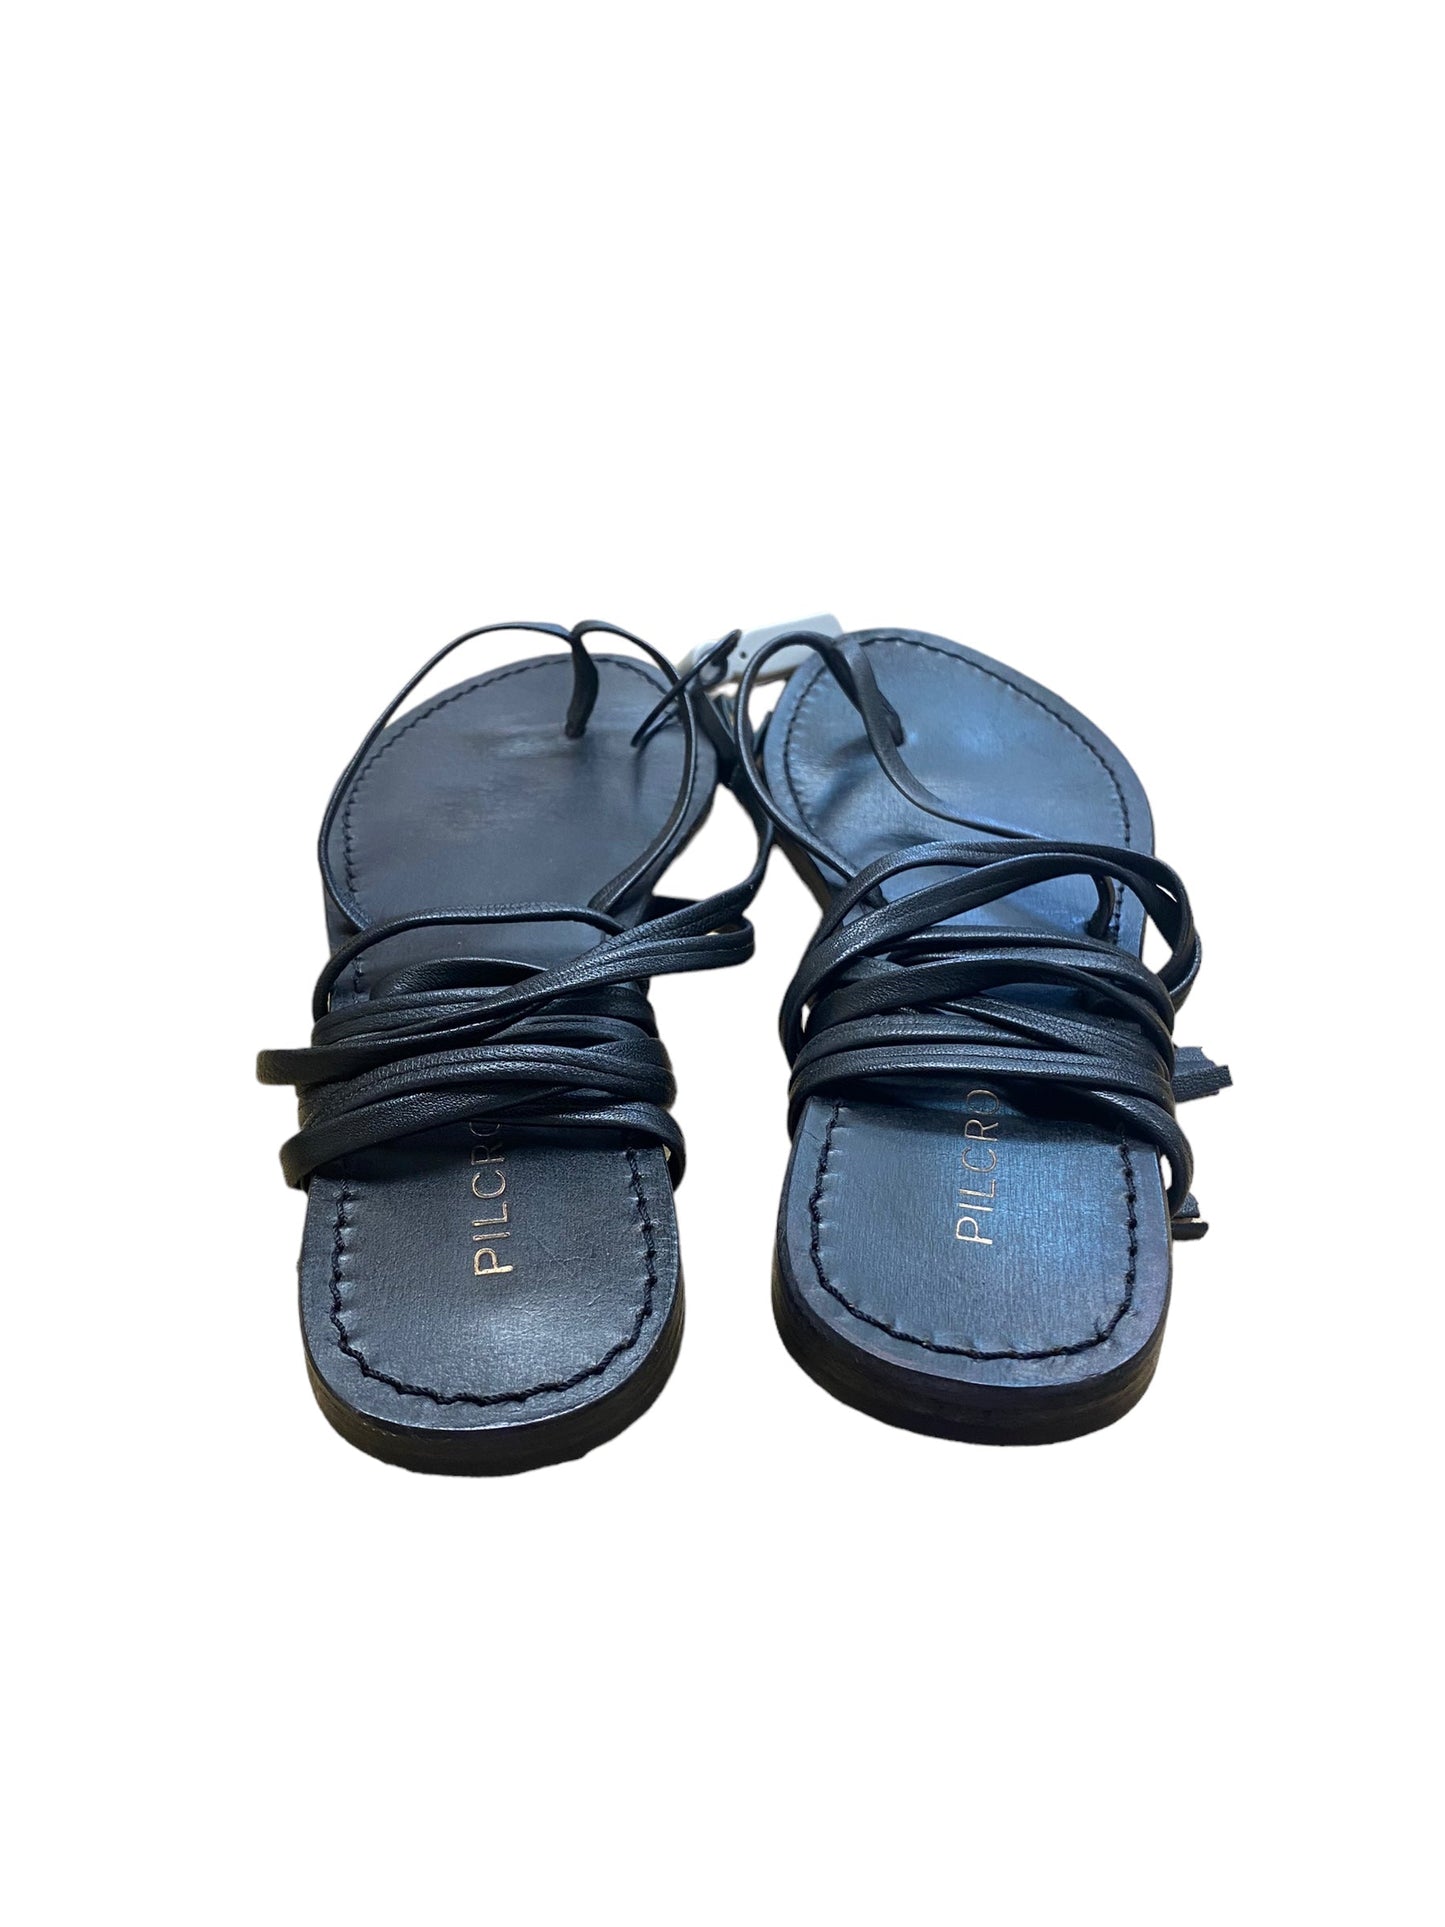 Sandals Flats By Pilcro  Size: 7